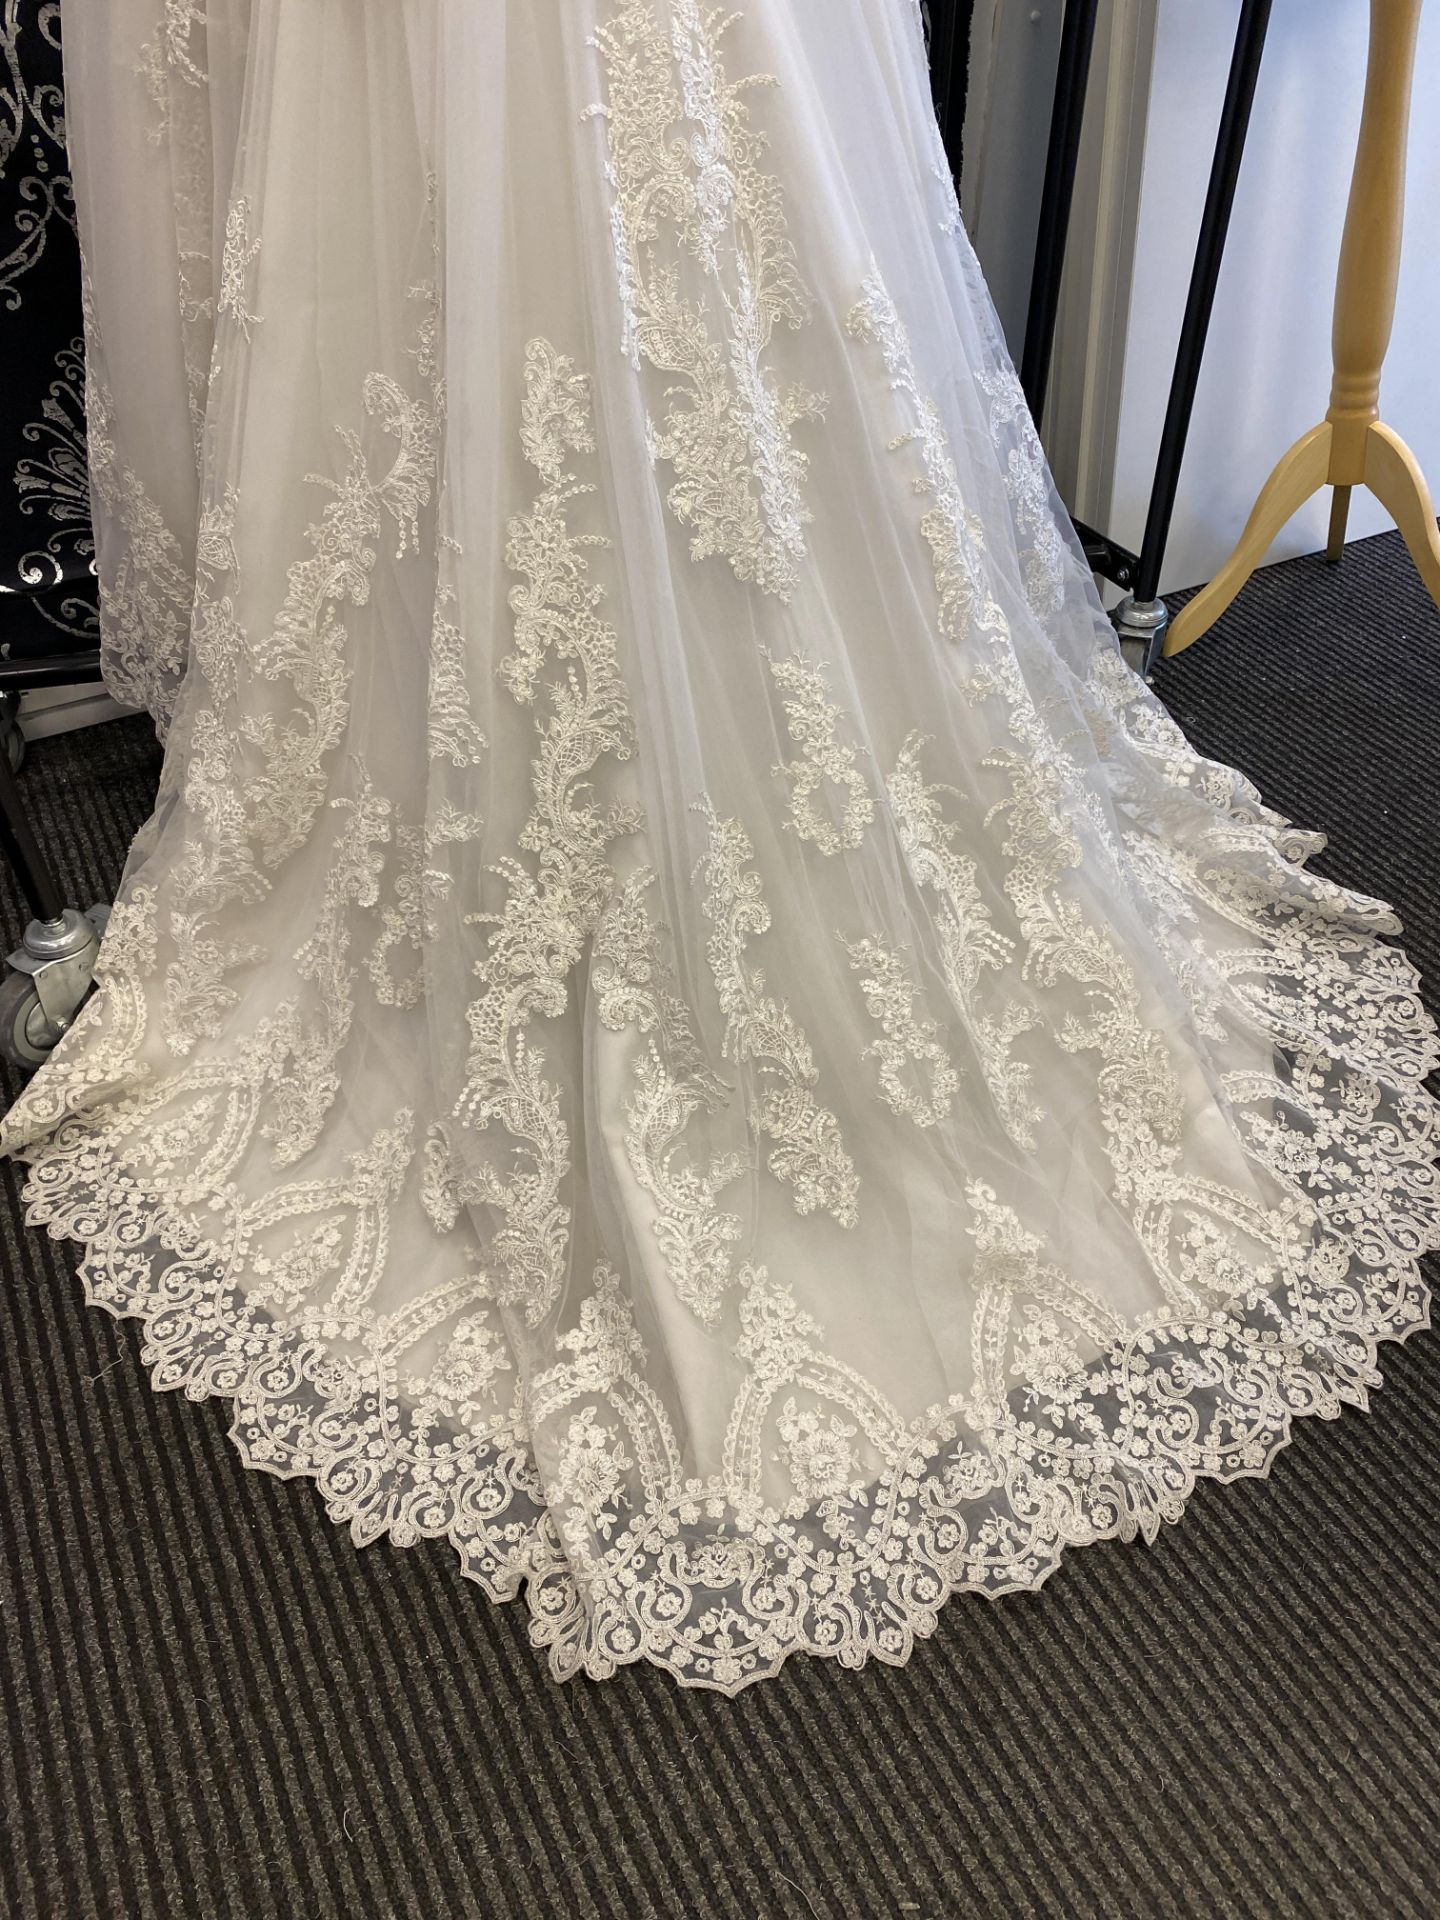 1 x MORI LEE '2787' Stunning Strapless Lace And Chiffon Designer Wedding Dress RRP £1,200 UK 12 - Image 7 of 12